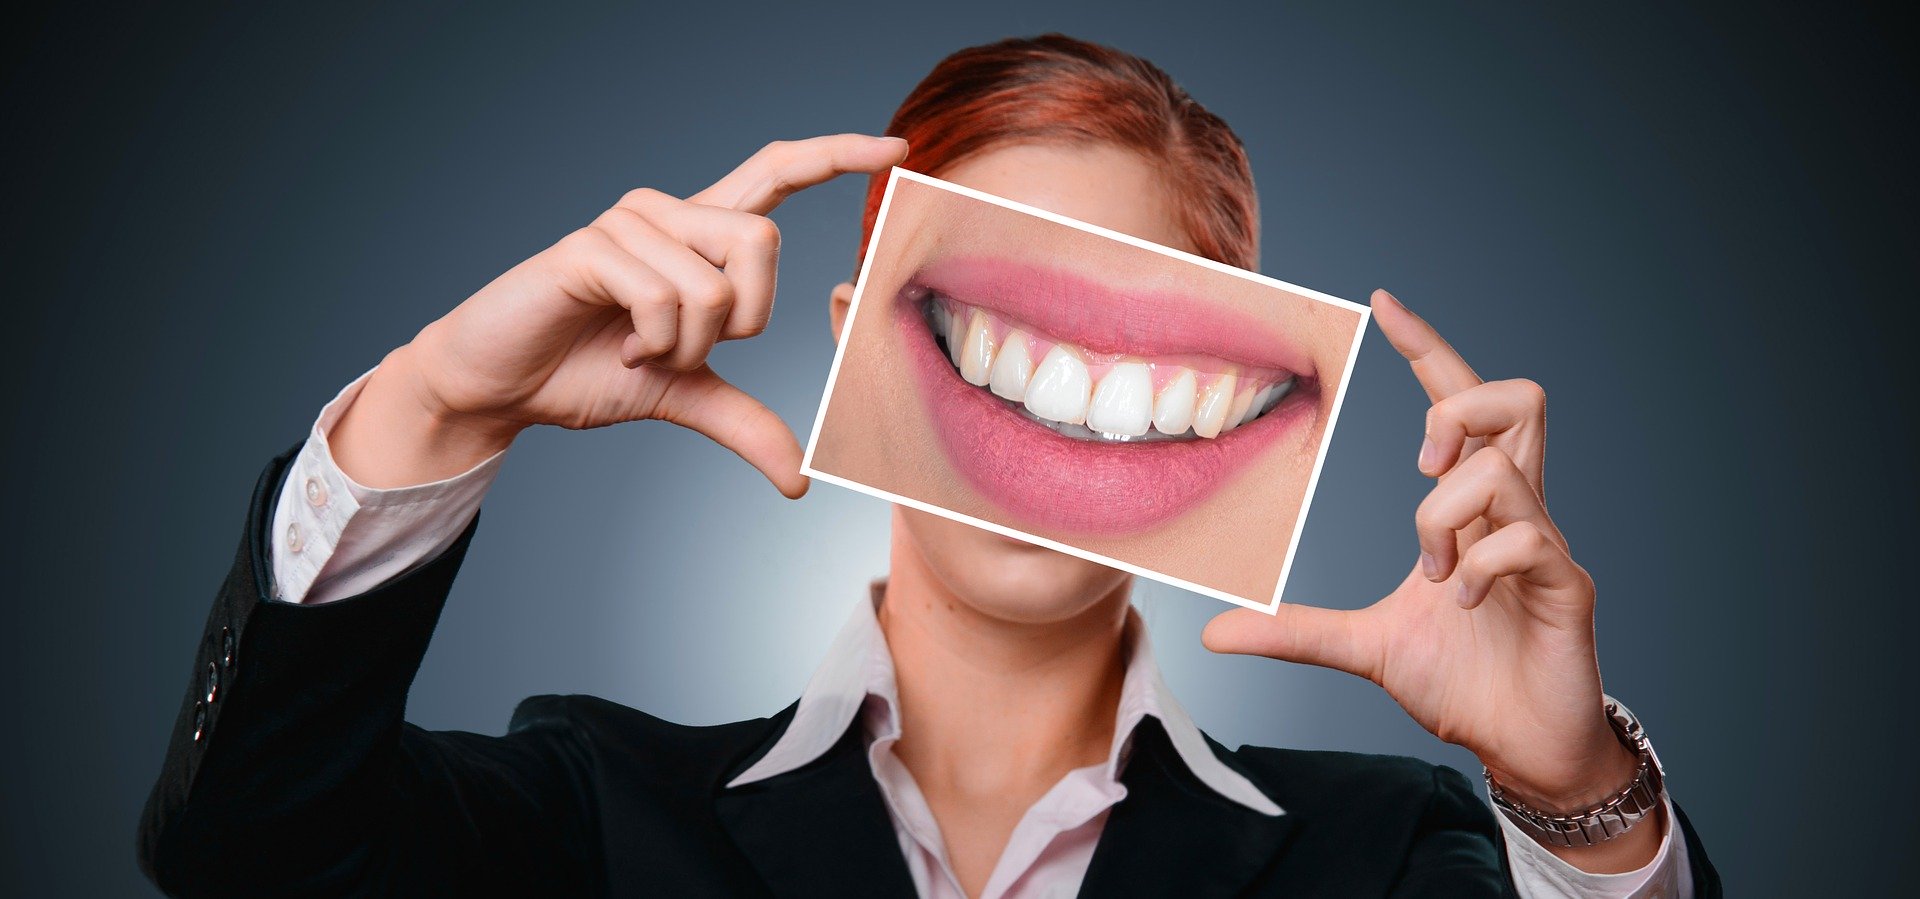 Tips for Choosing a Wisdom Teeth Removal Dentist